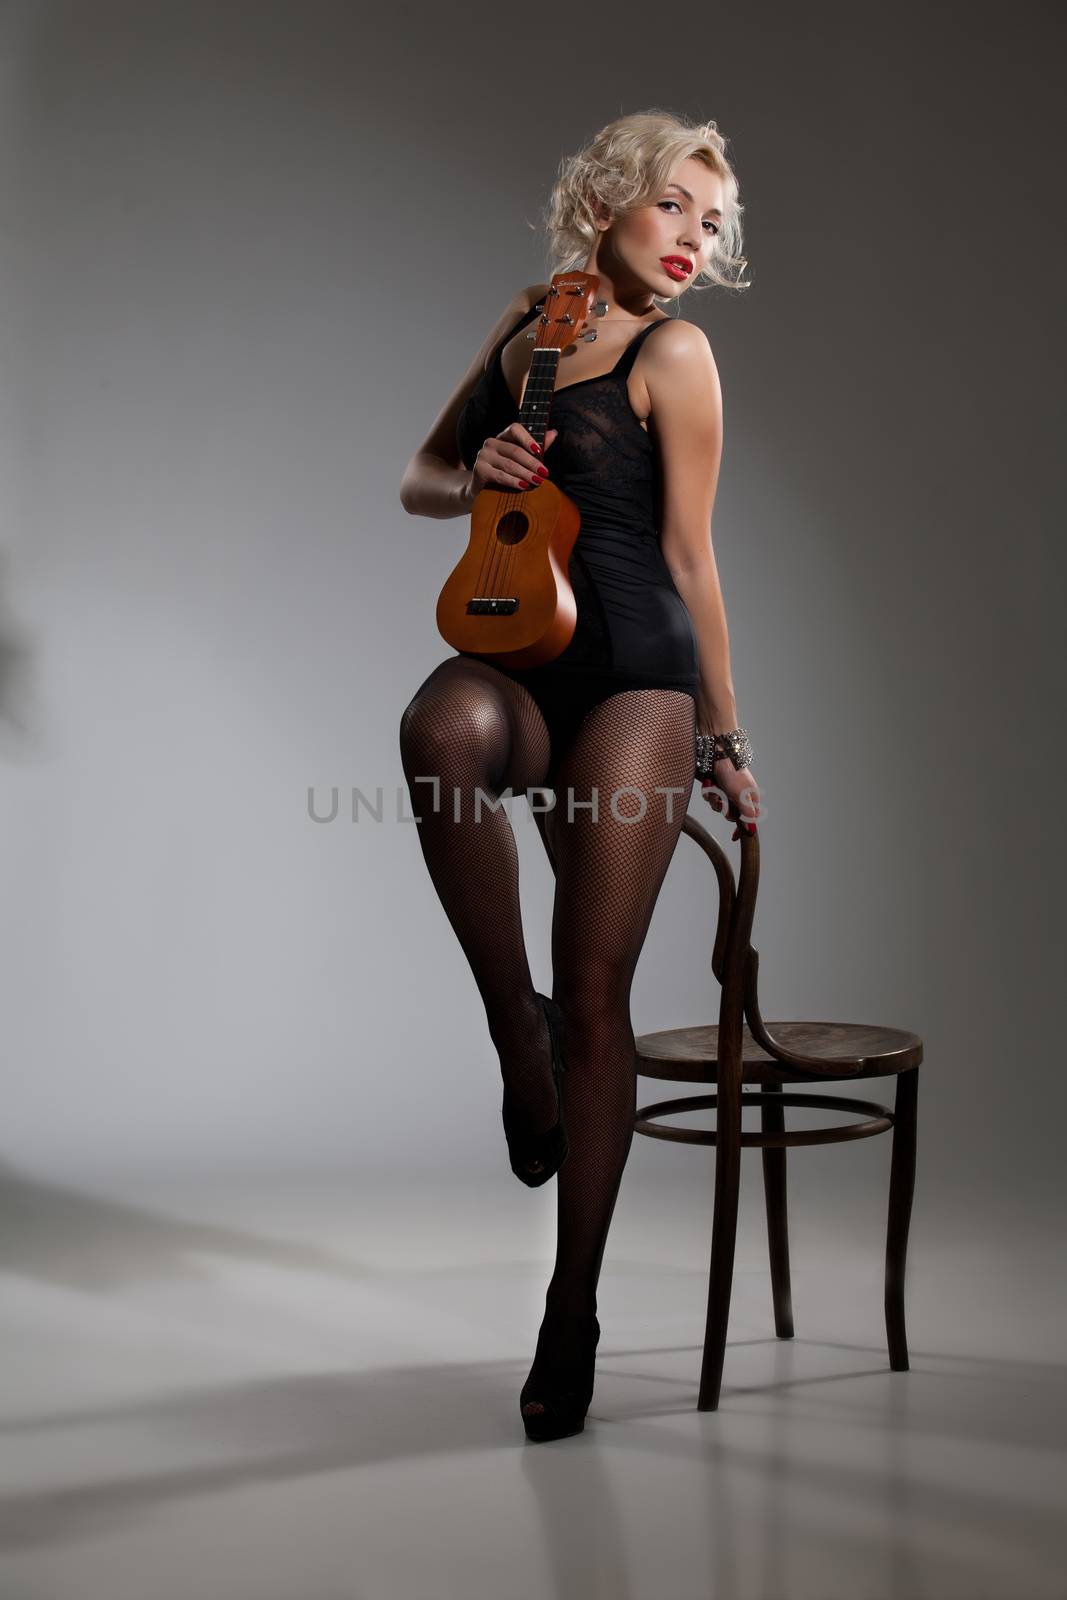 Young beautiful blonde woman with a small hawaiian guitar